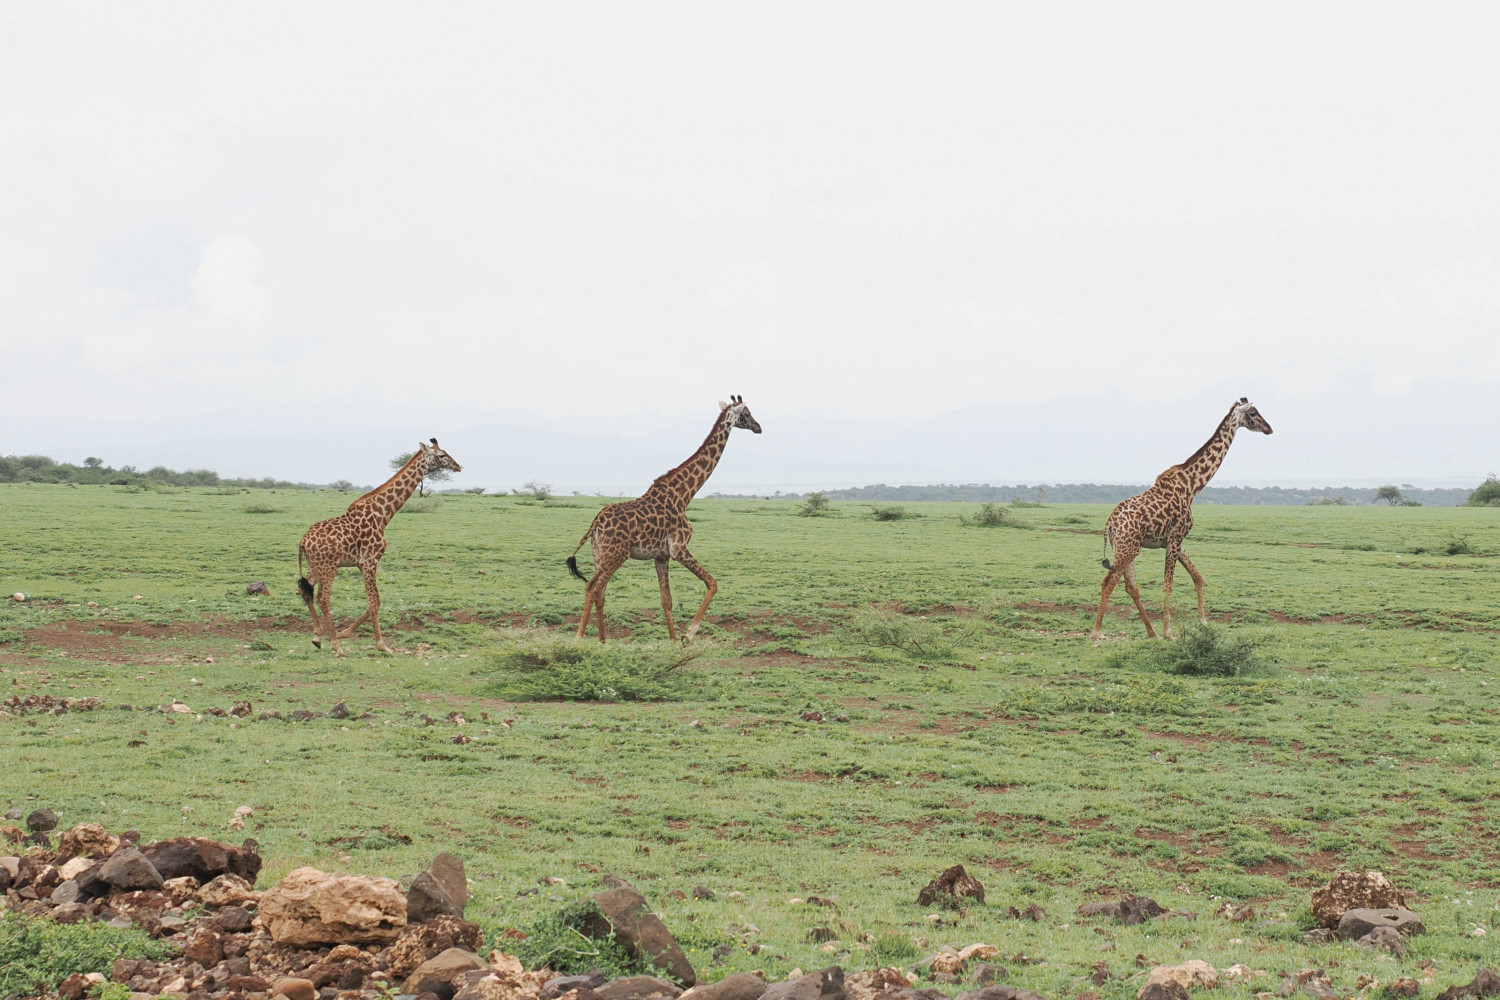 Three giraffes running in a field.